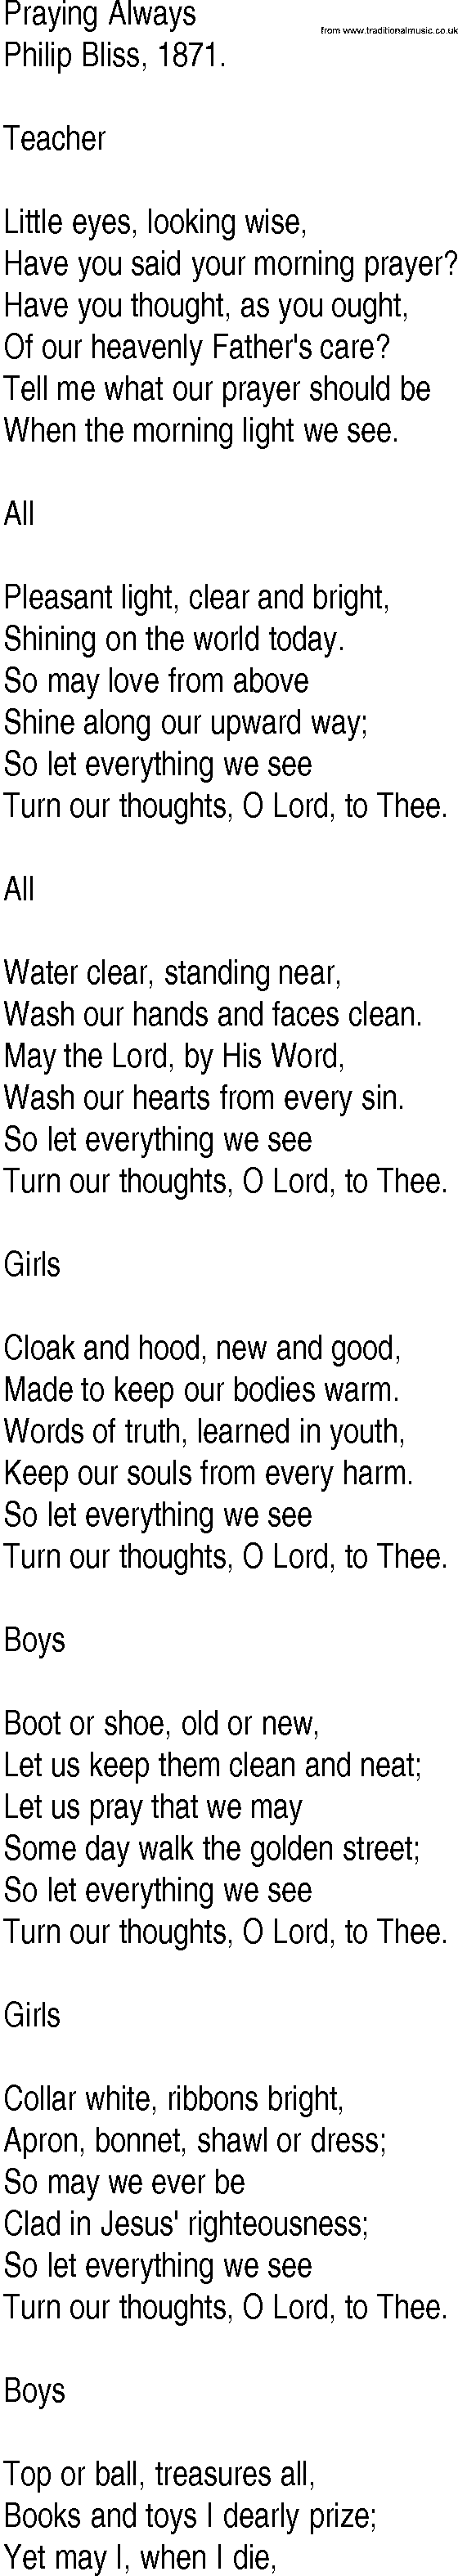 Hymn and Gospel Song: Praying Always by Philip Bliss lyrics